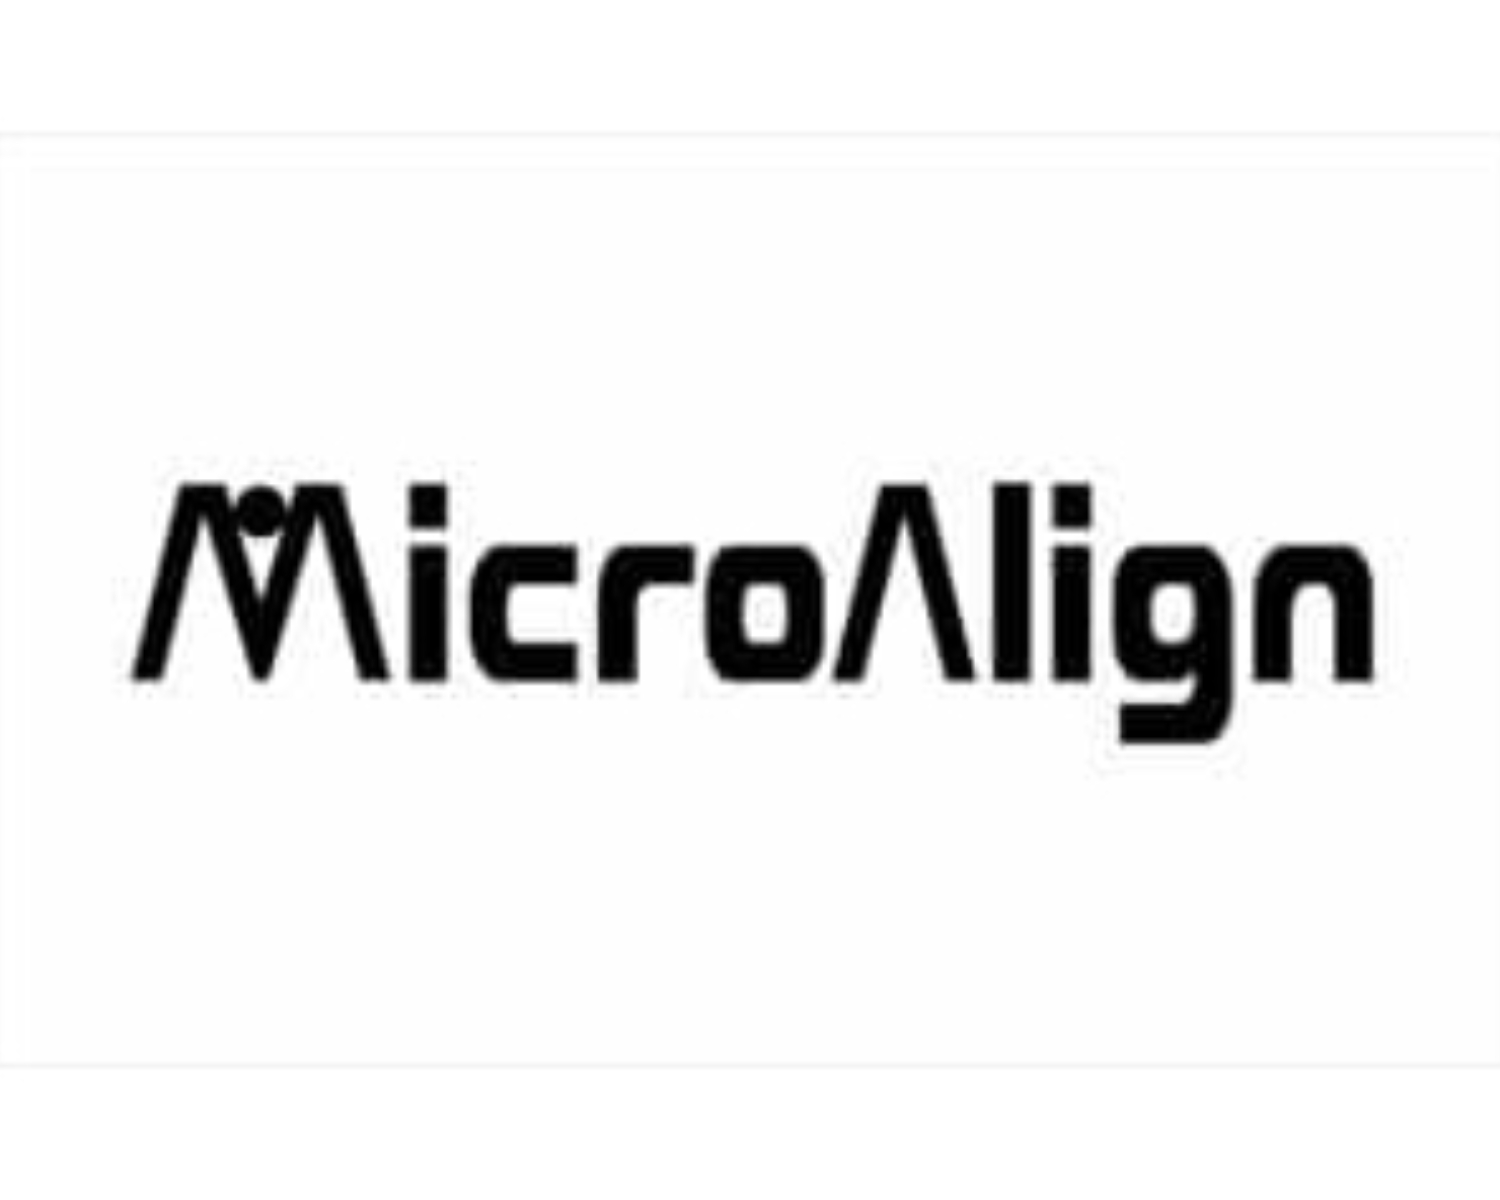 MicroAlign